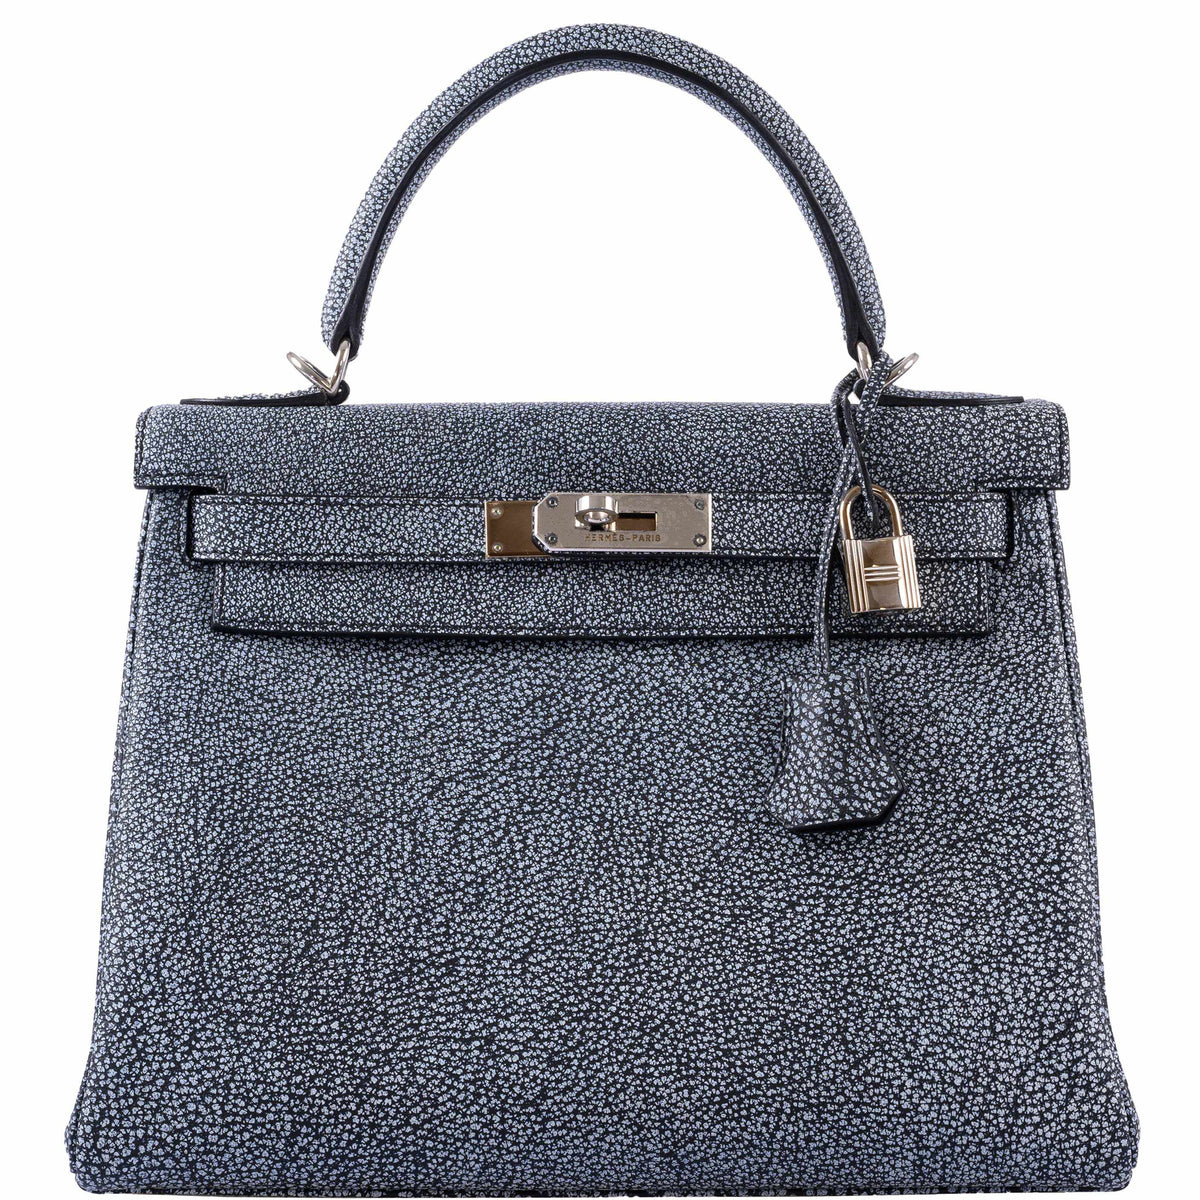 Parchemin leather and palladium hardware handbag, Kelly Danse, Hermès, 2007, Hermès Handbags & Accessories Online, Jewellery